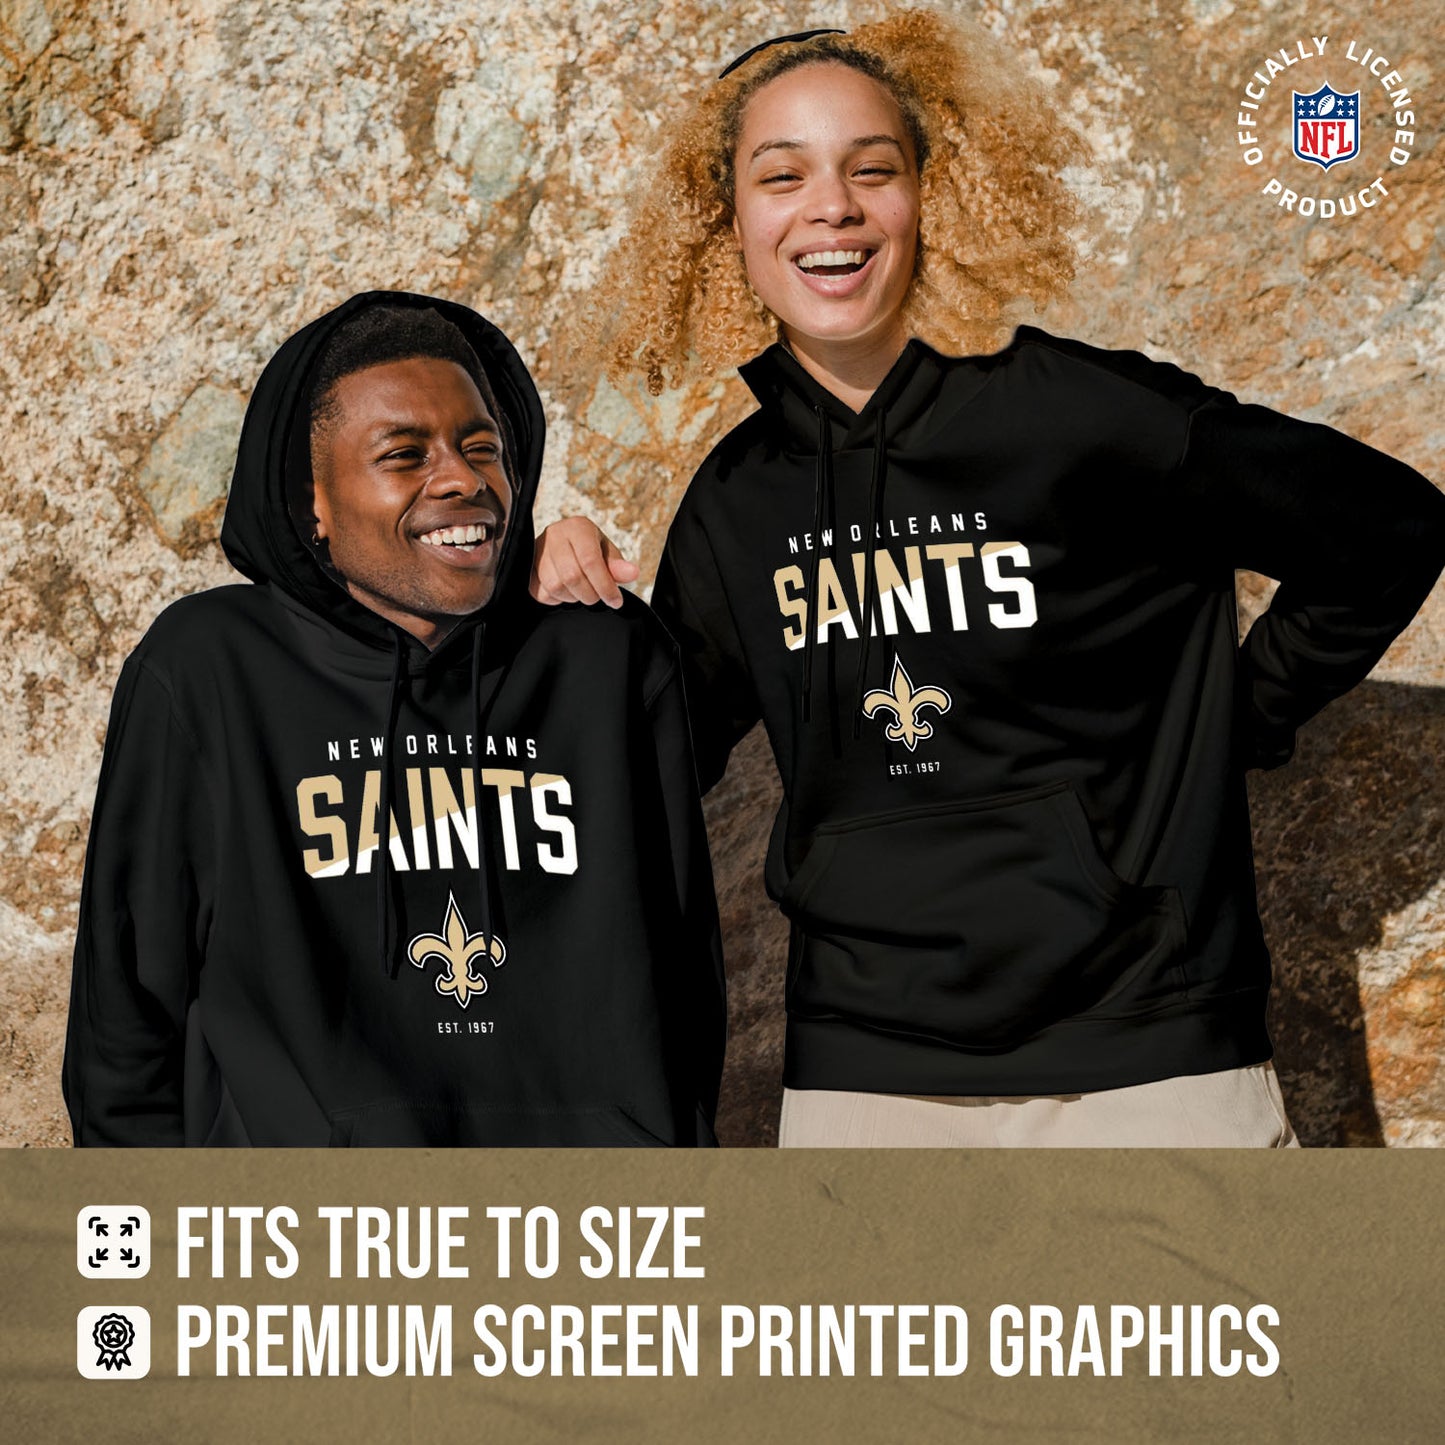 New Orleans Saints Adult NFL Diagonal Fade Fleece Hooded Sweatshirt - Black